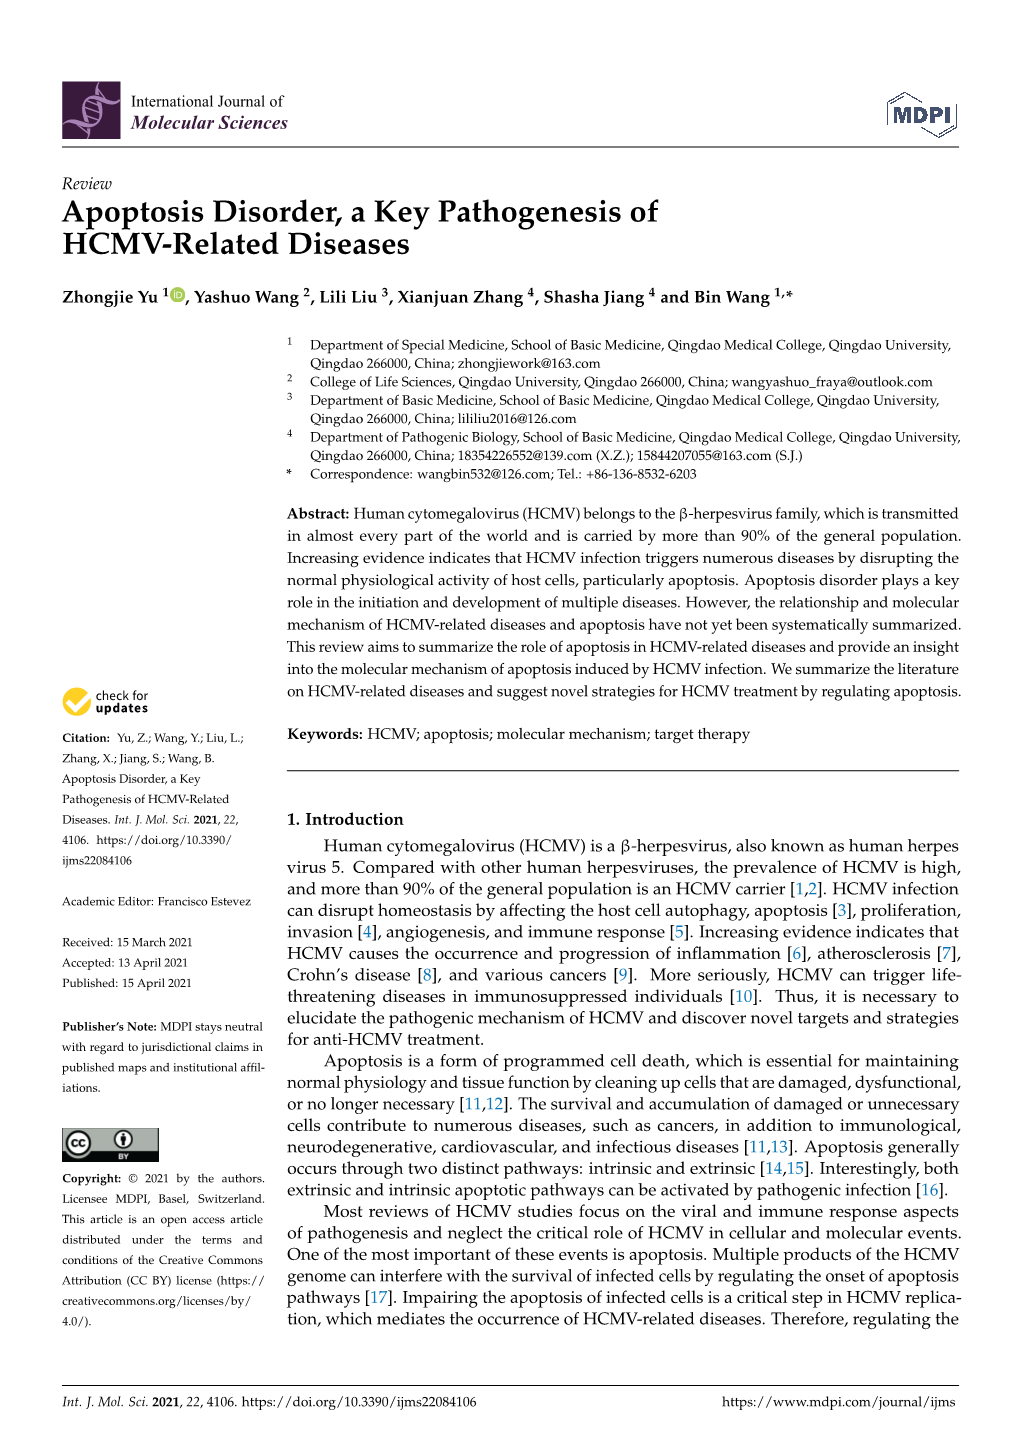 Apoptosis Disorder, a Key Pathogenesis of HCMV-Related Diseases